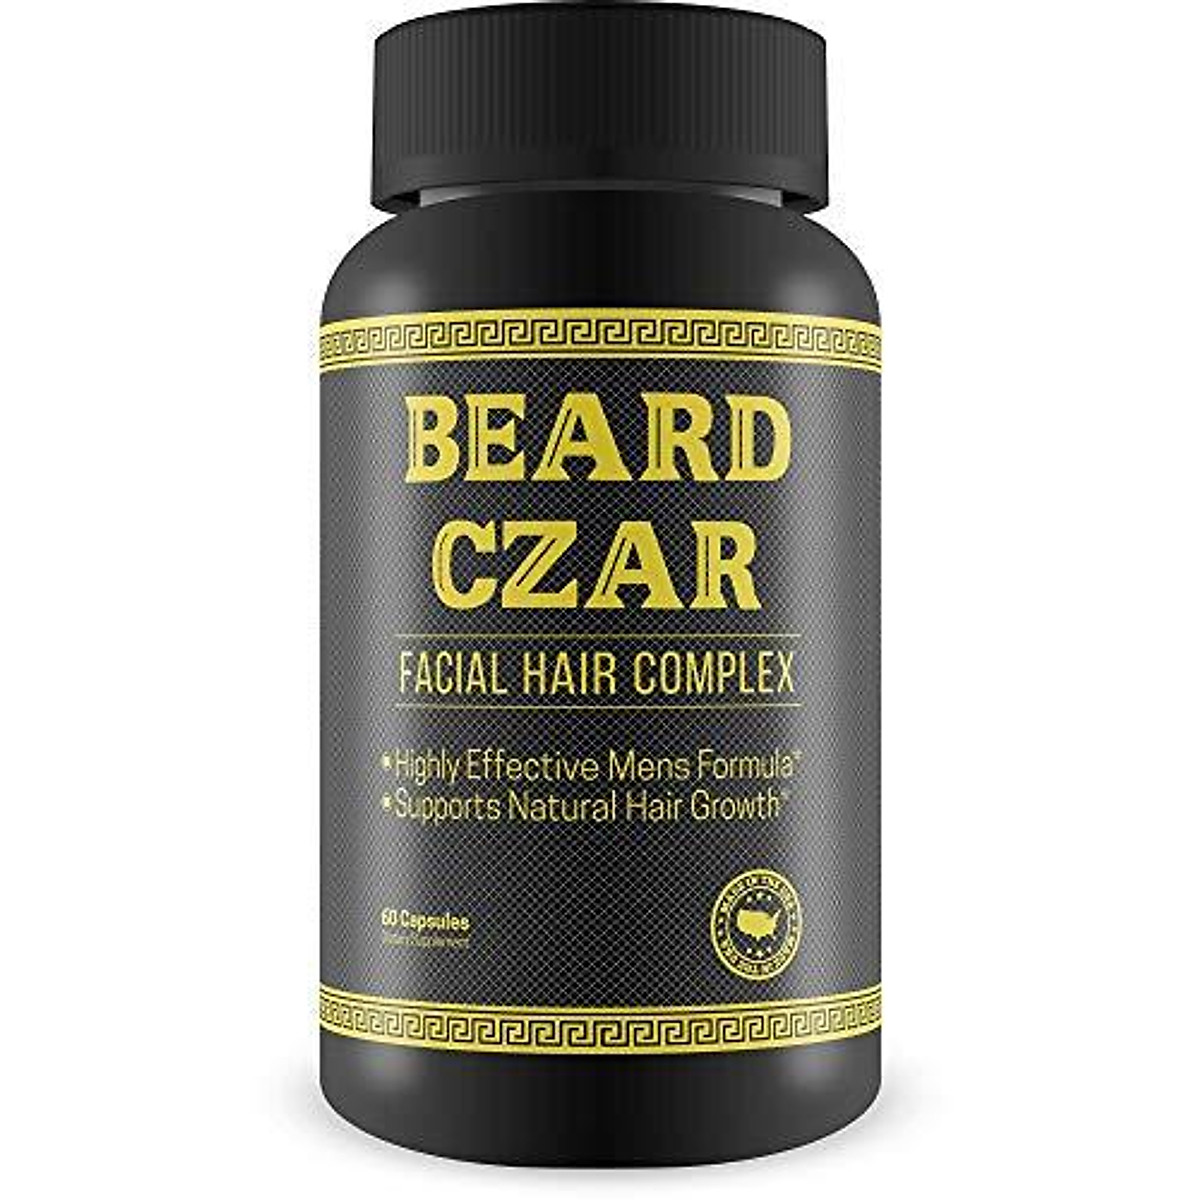 Mua The Beard Czar-Facial Hair Complex- Highly Effective Mens Formula-  Supports Natural Hair Growth-Improve Beard Quality and Nourishment-60  Capsules tại Global Ecom